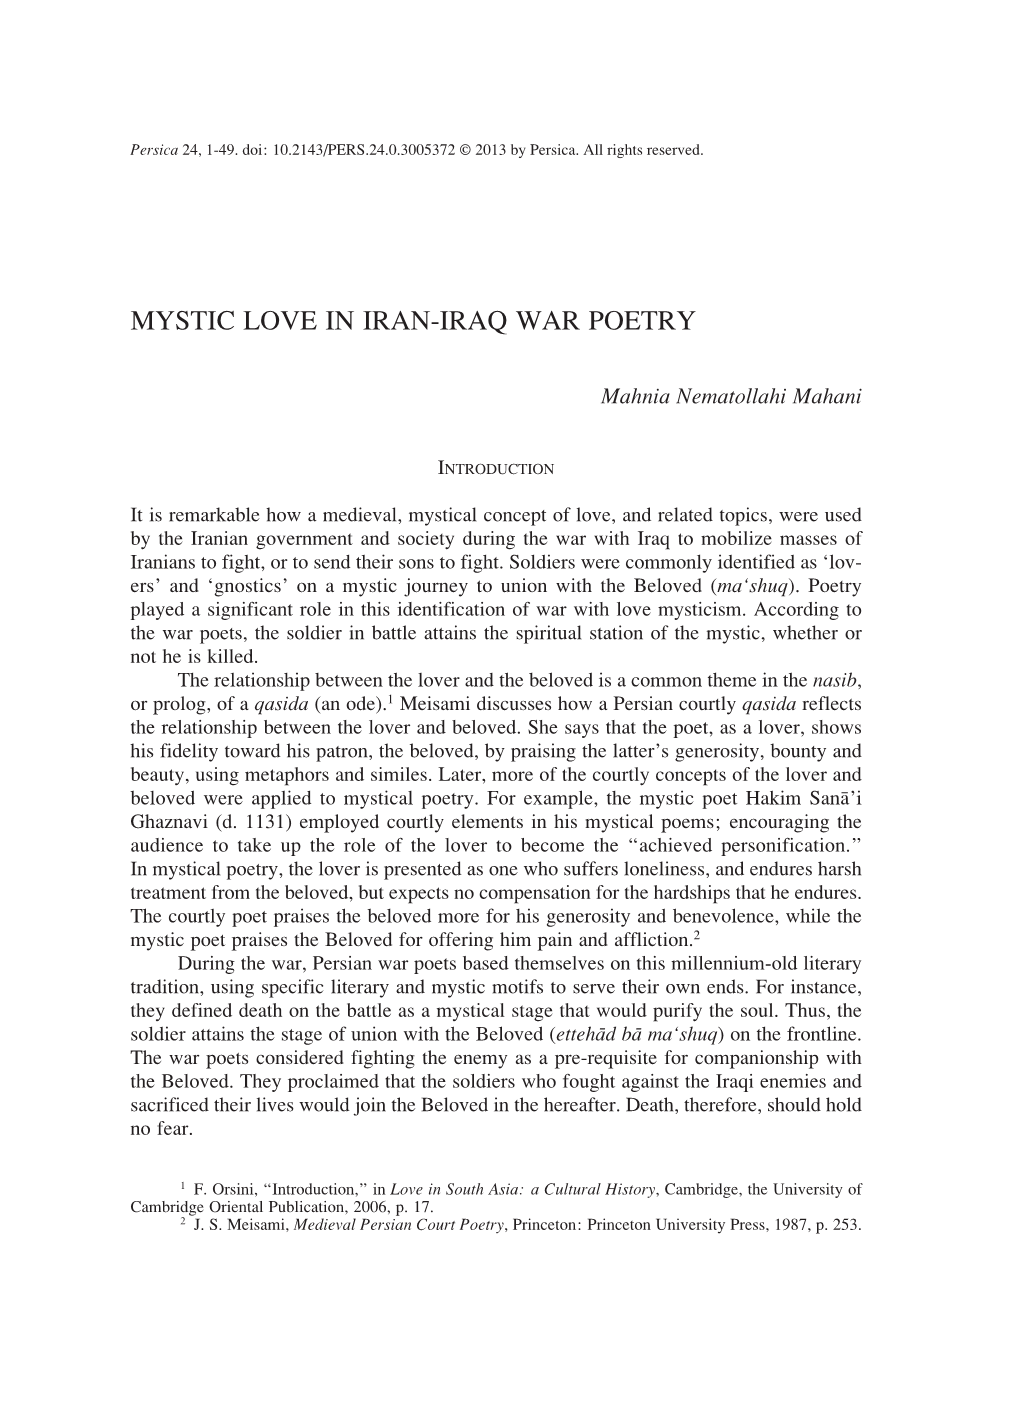 Mystic Love in Iran-Iraq War Poetry